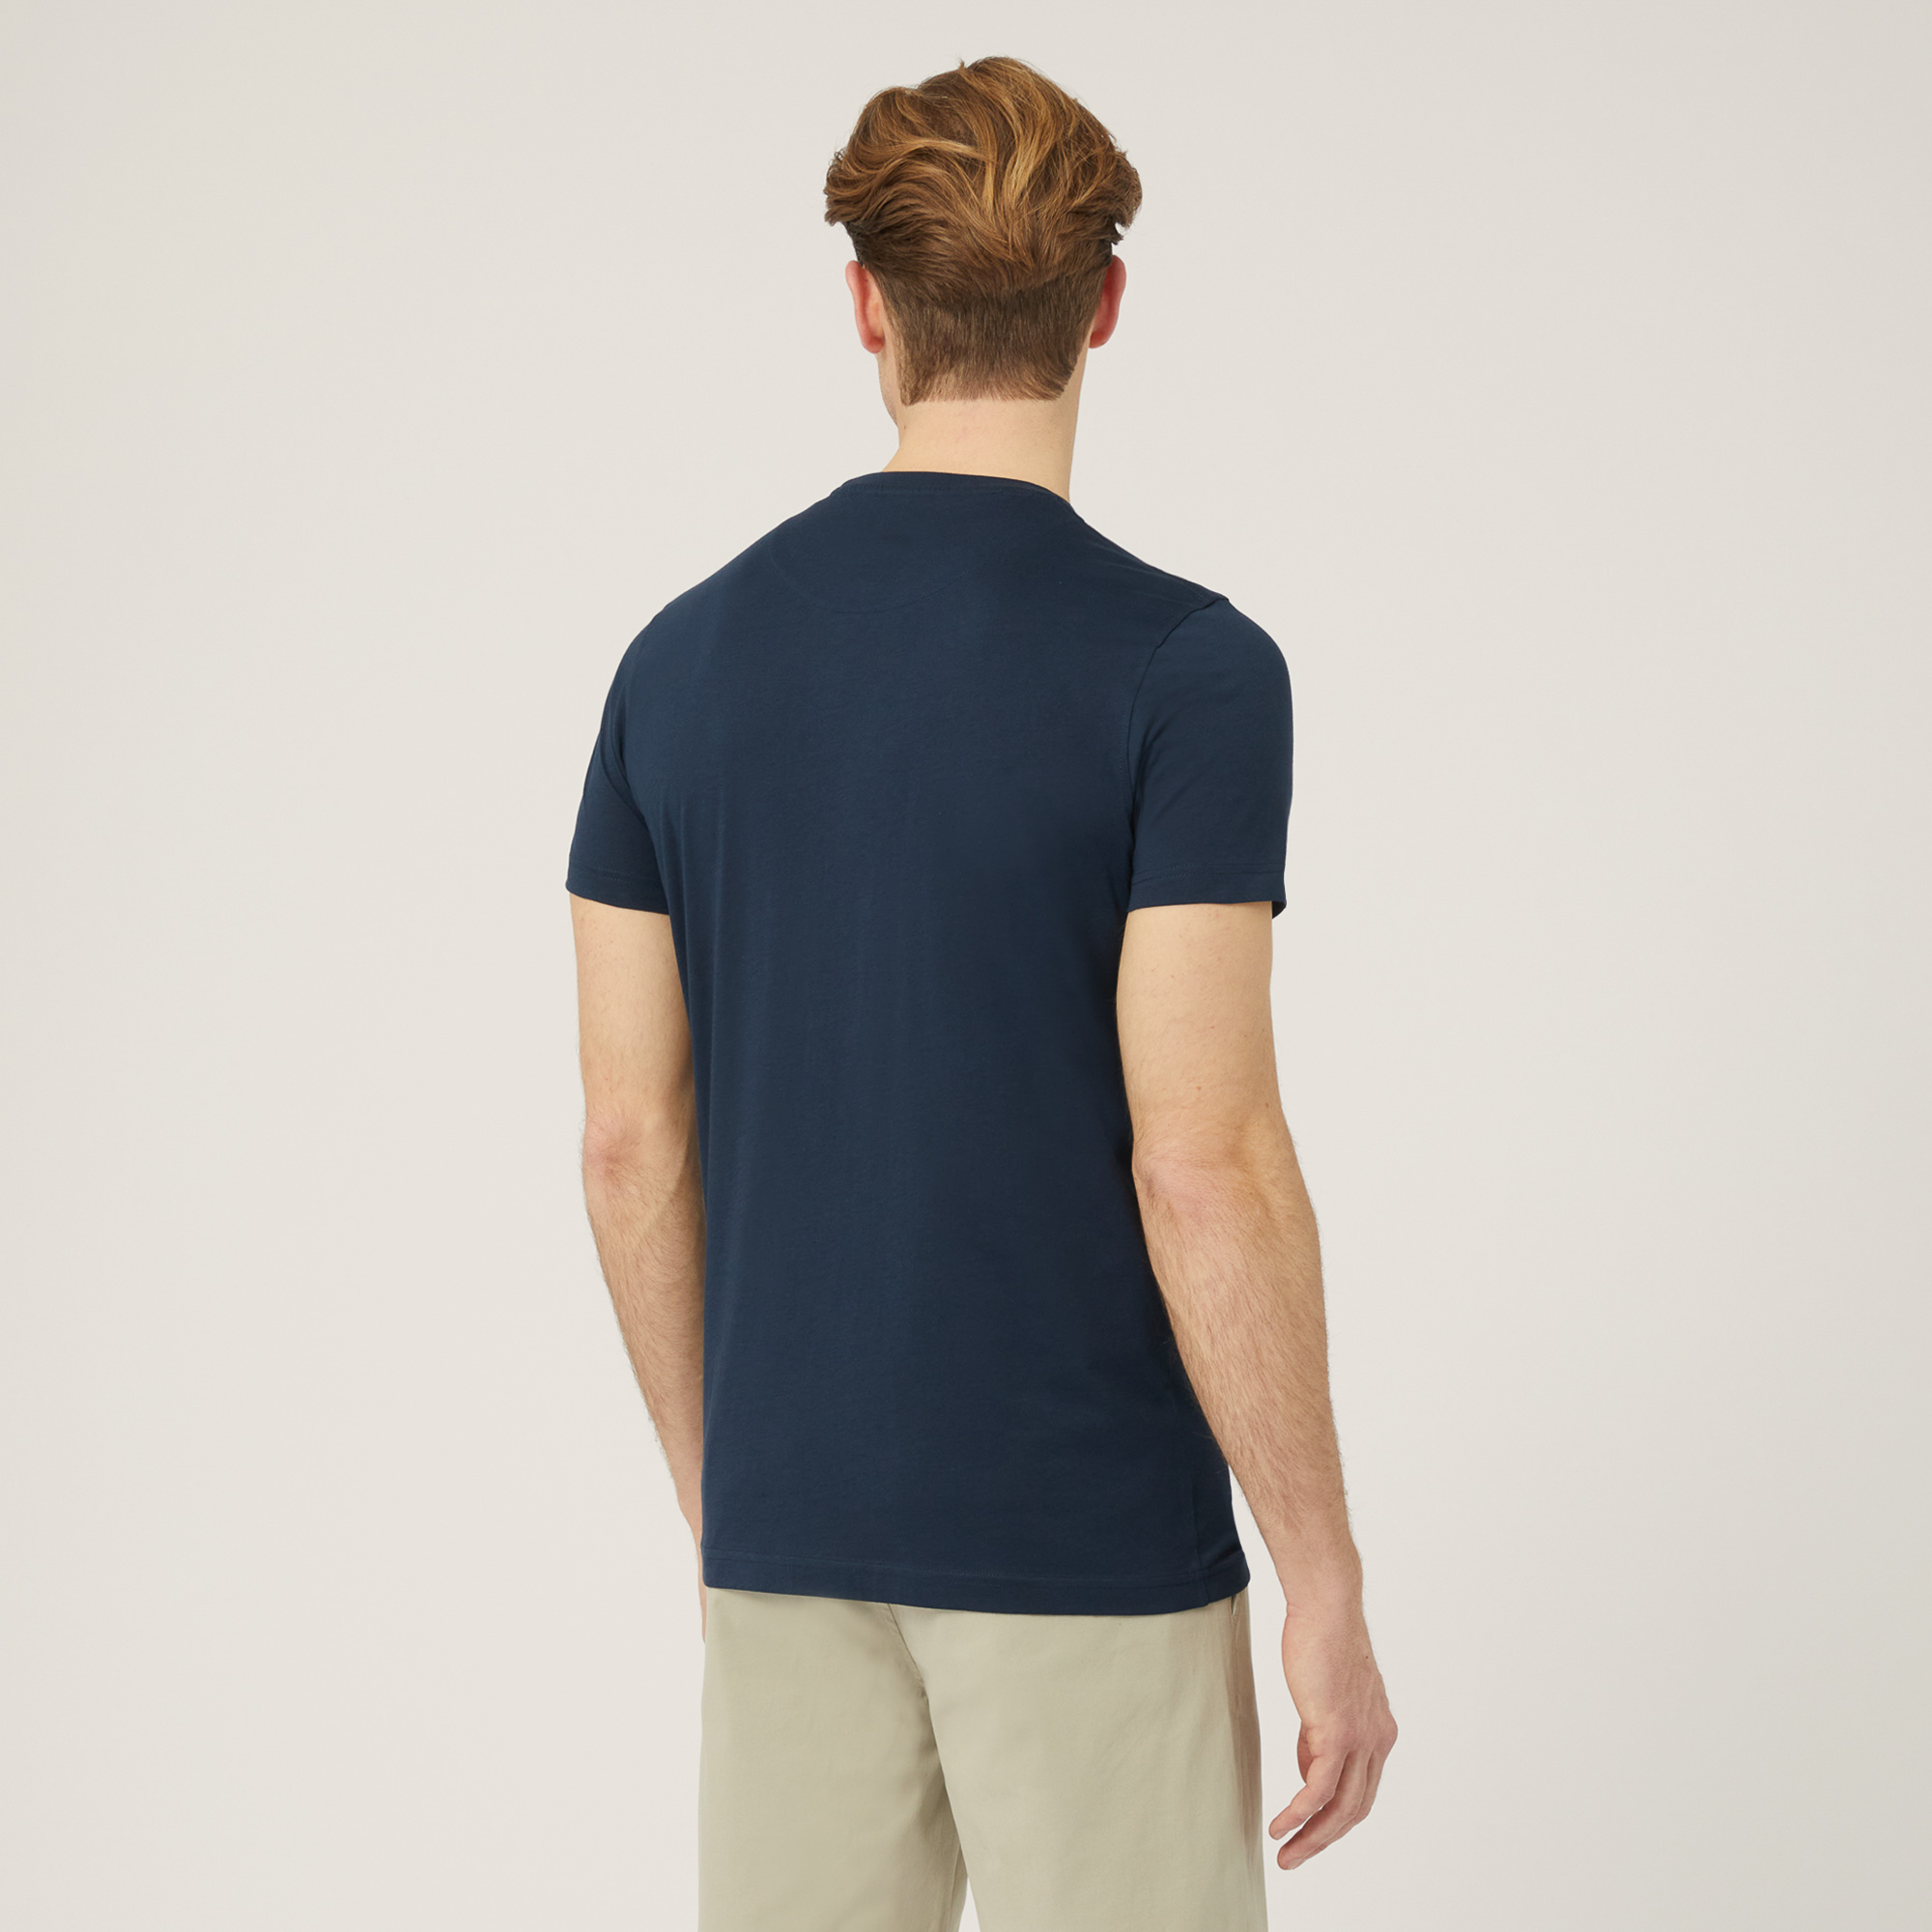 T-Shirt Monogramma A Contrasto, Light Blue, large image number 1